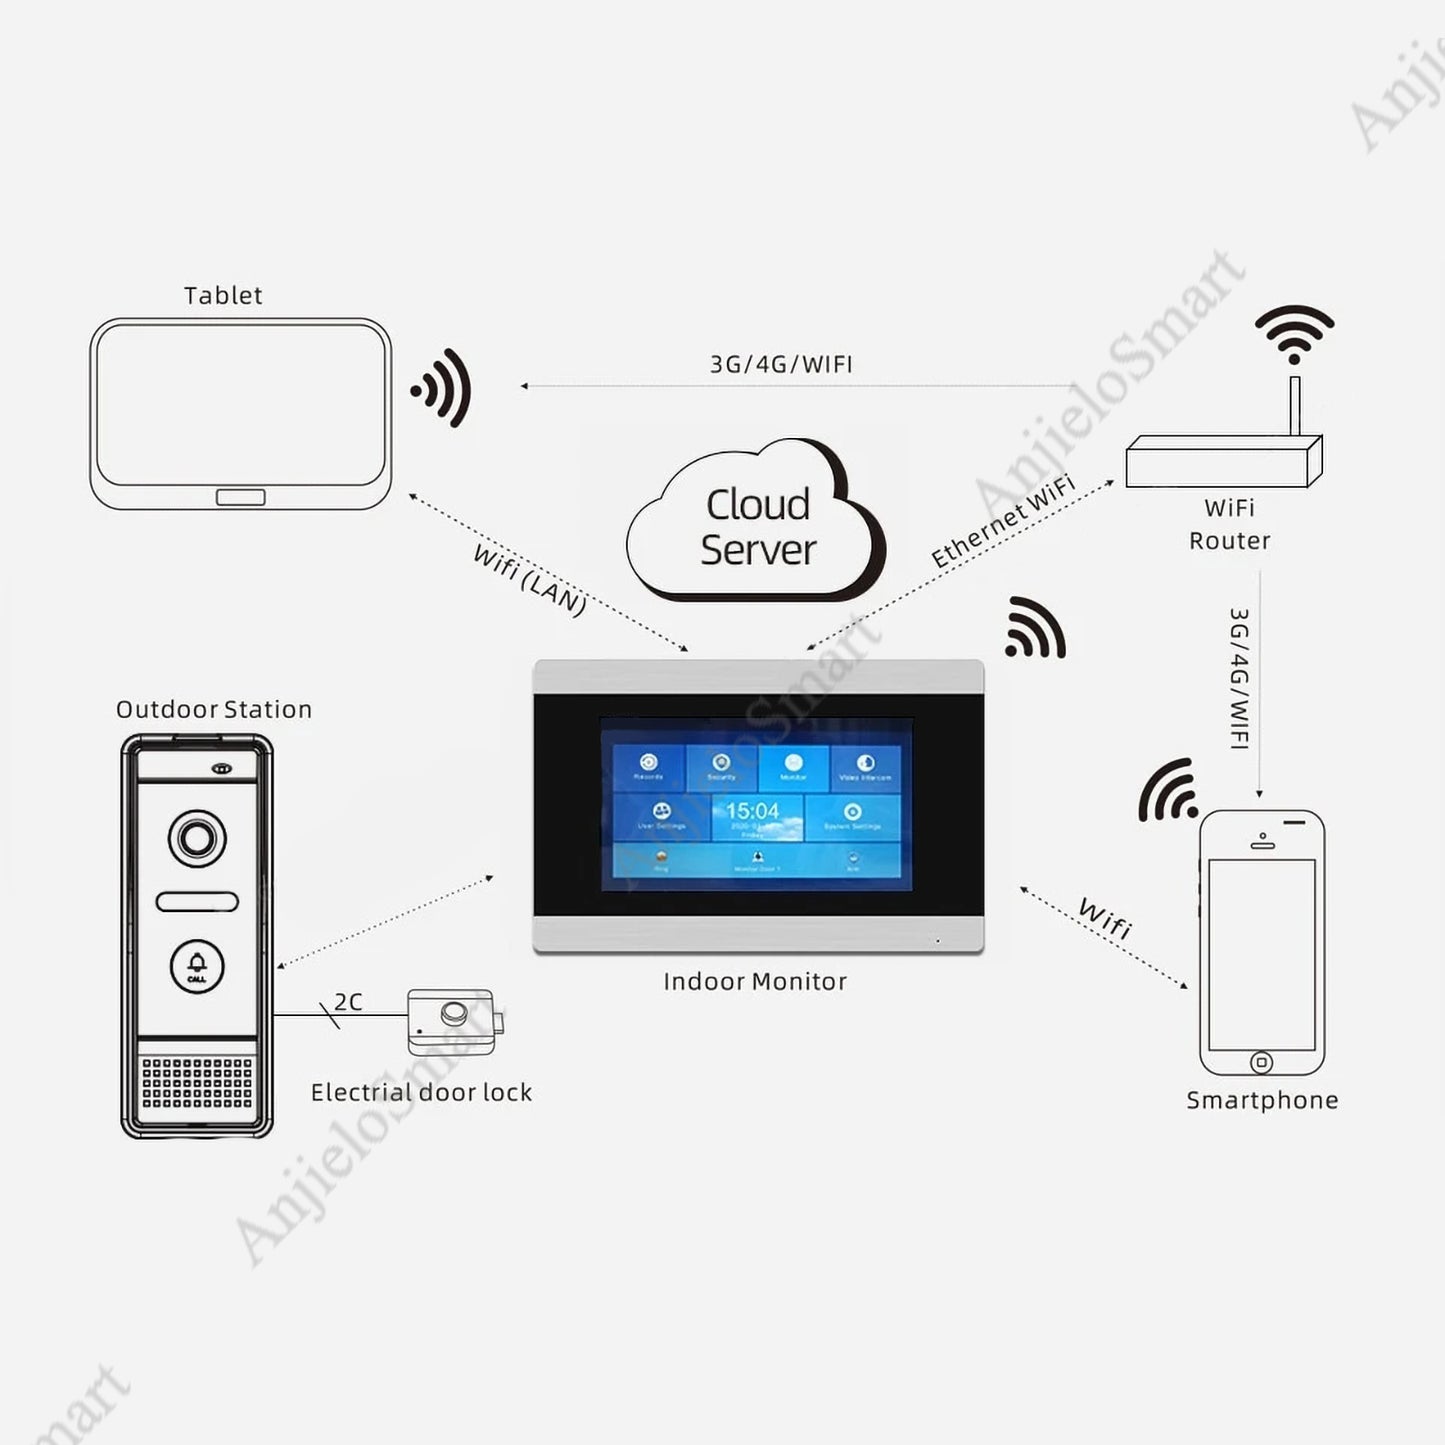 AnjieloSmart Touch Screen Wireless Video Door Phone Intercom Video Doorbell Access Control System Motion Detection